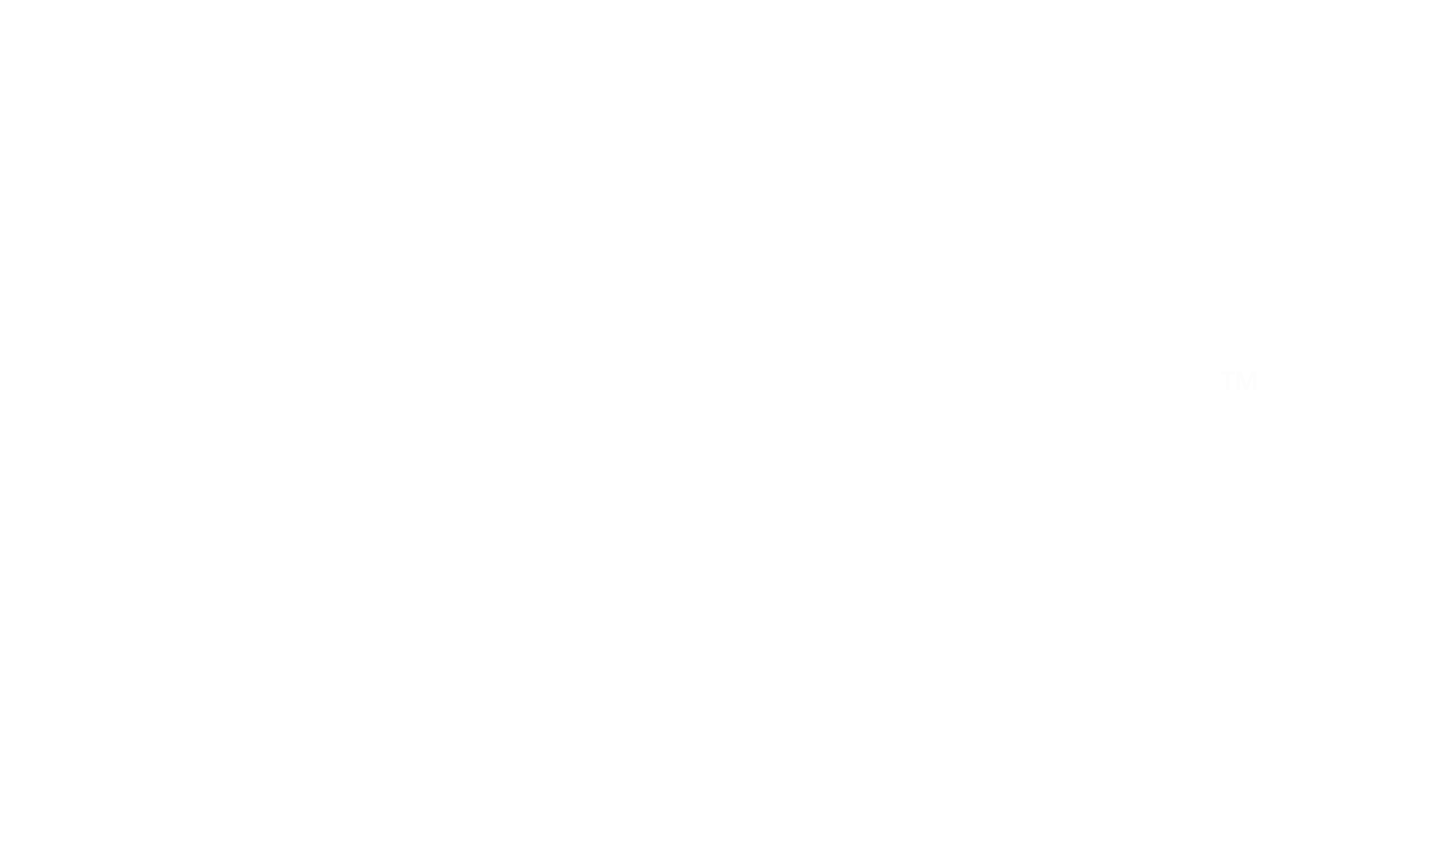 Bluegrass Farms of Ohio